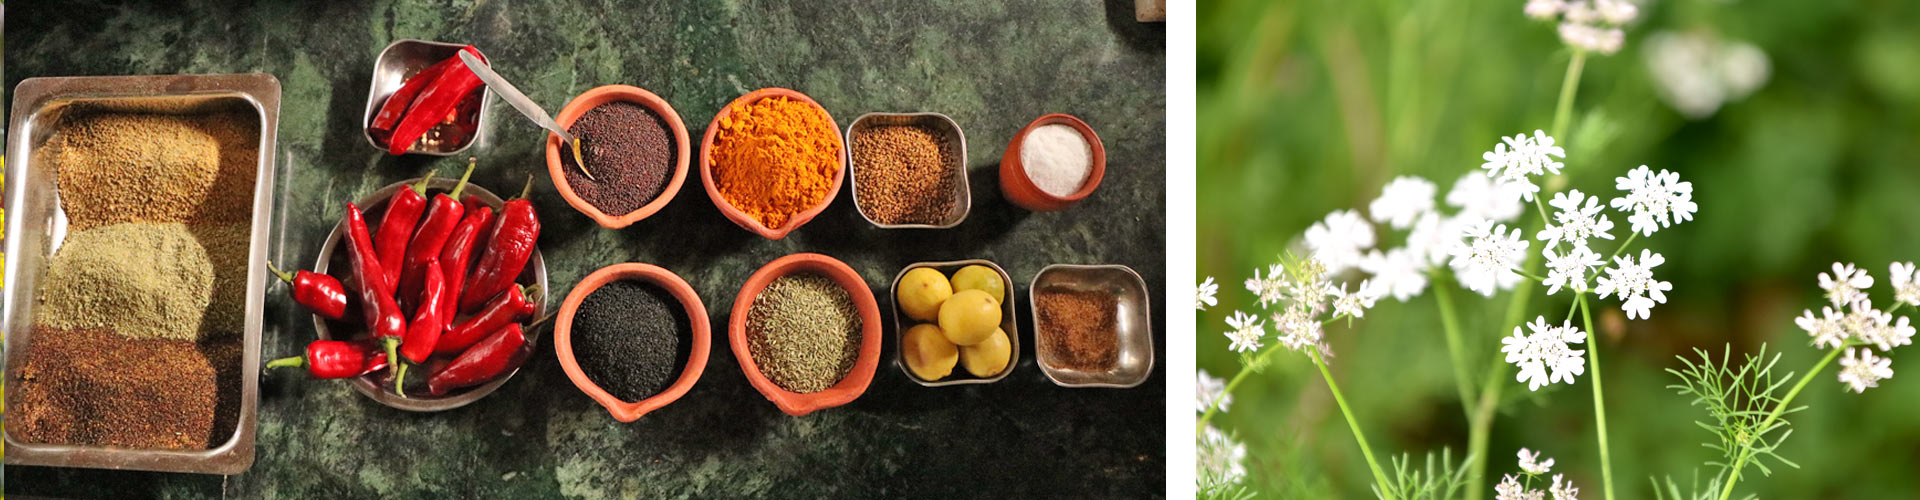 Masala - Spices, Navdanya Organics